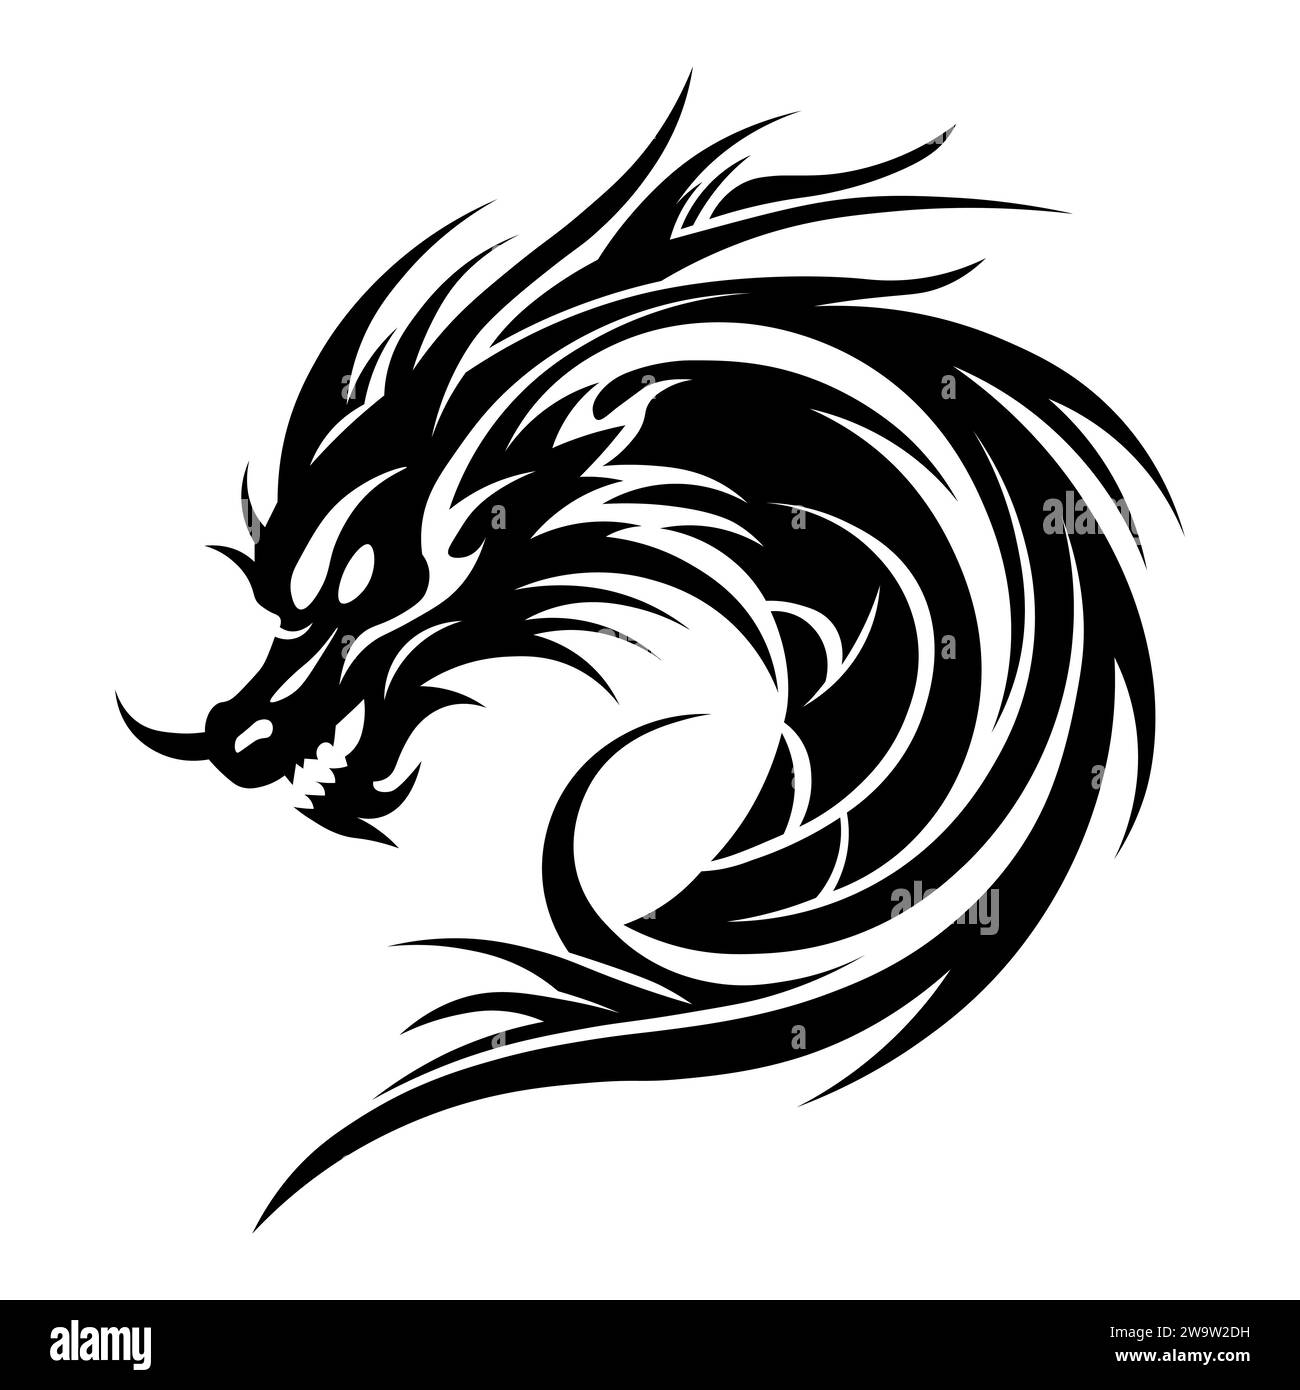 Dragon black vector icon on white background Stock Vector